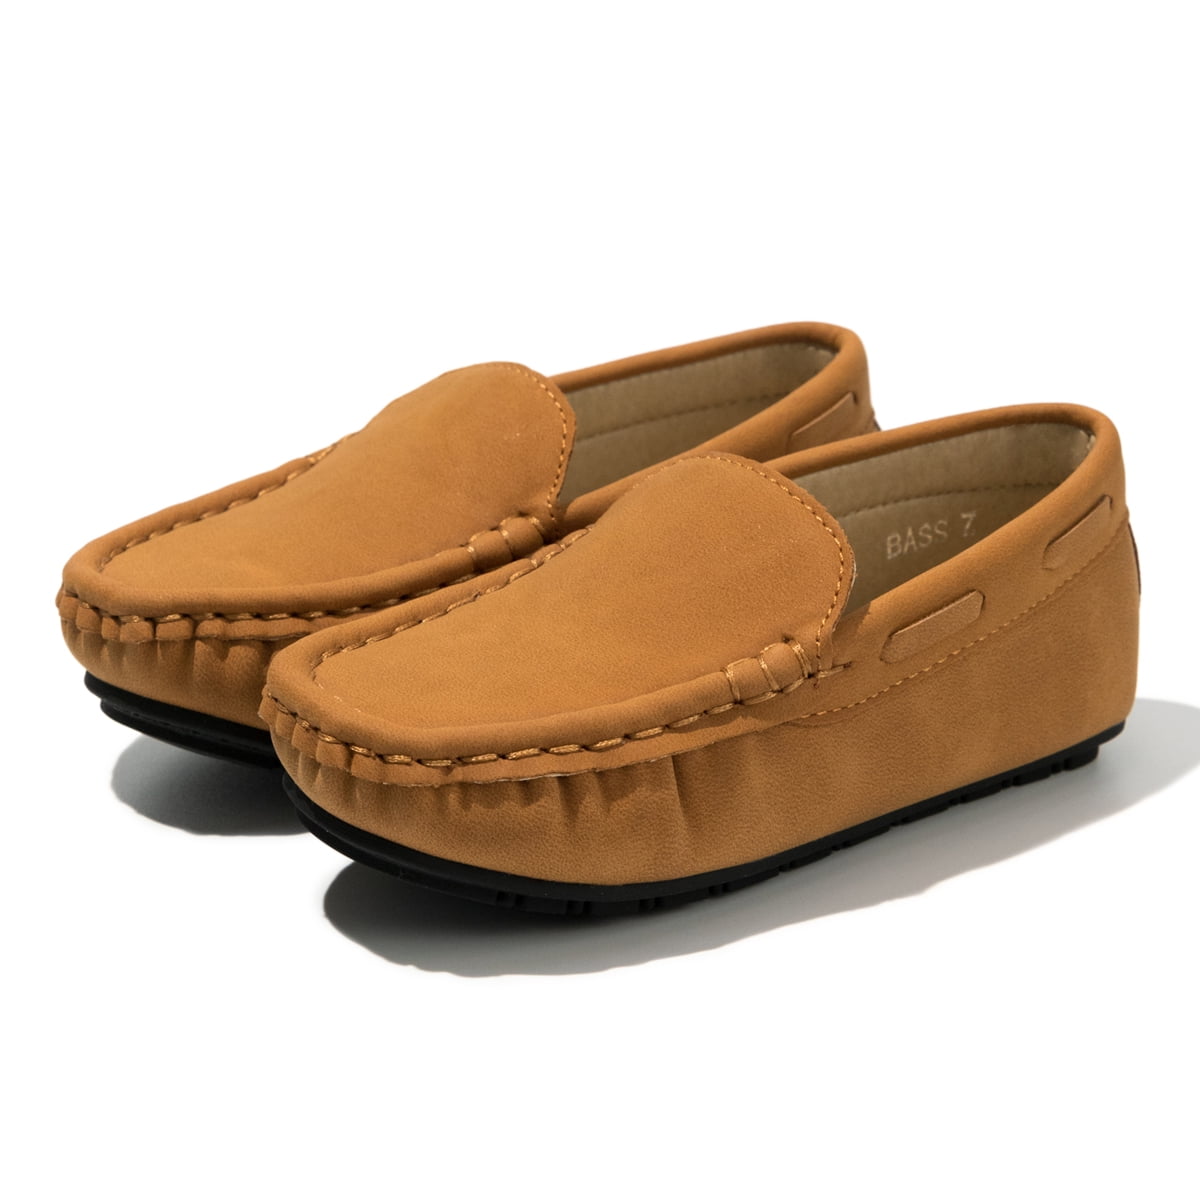 UBELLA Boys Slip-On Loafers Flats Boat Dress Shoes 